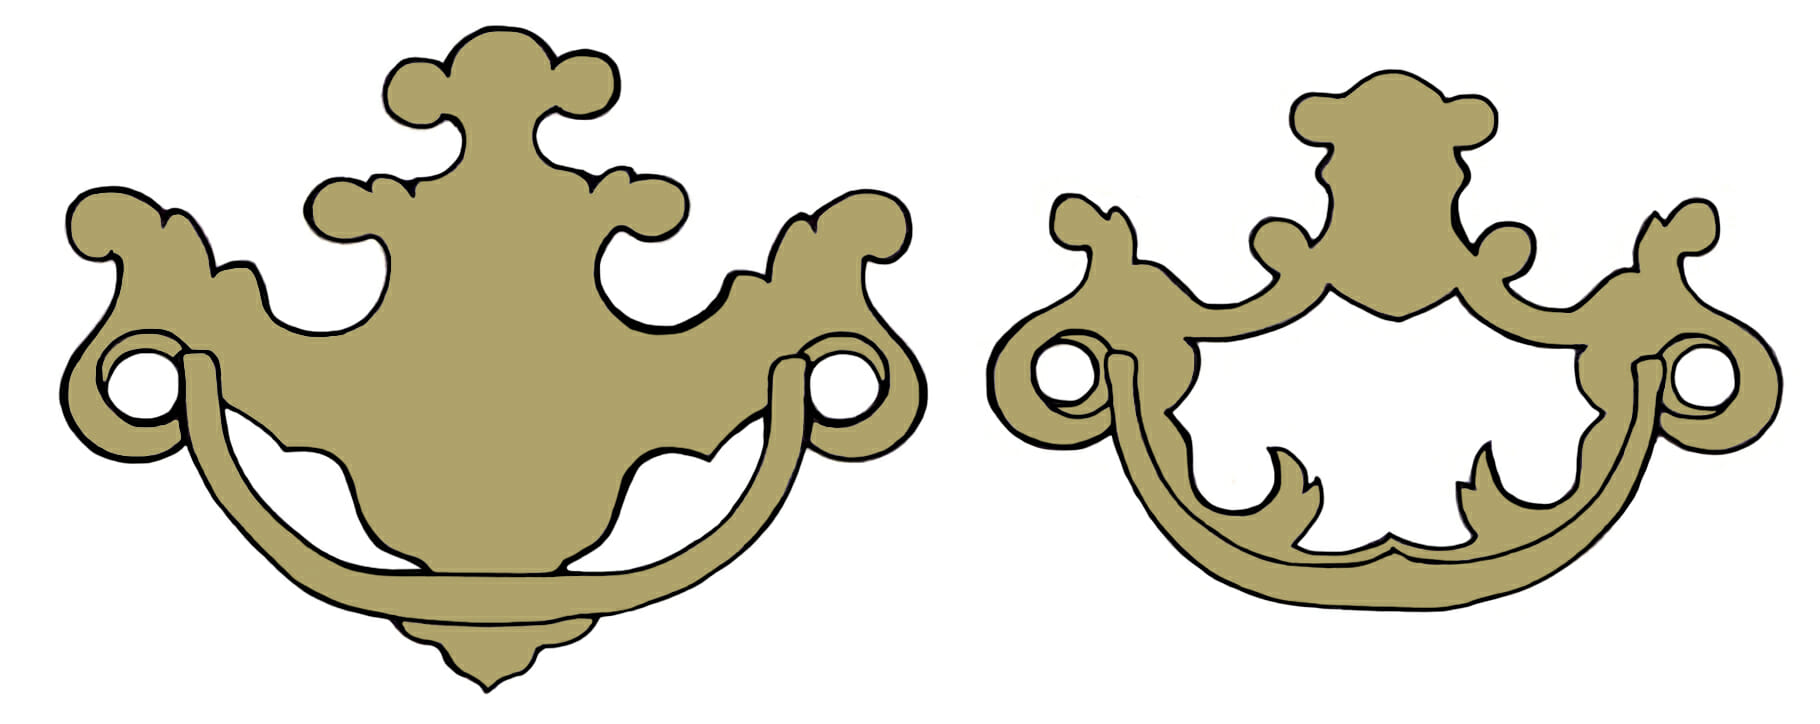 Antique brass handle shapes